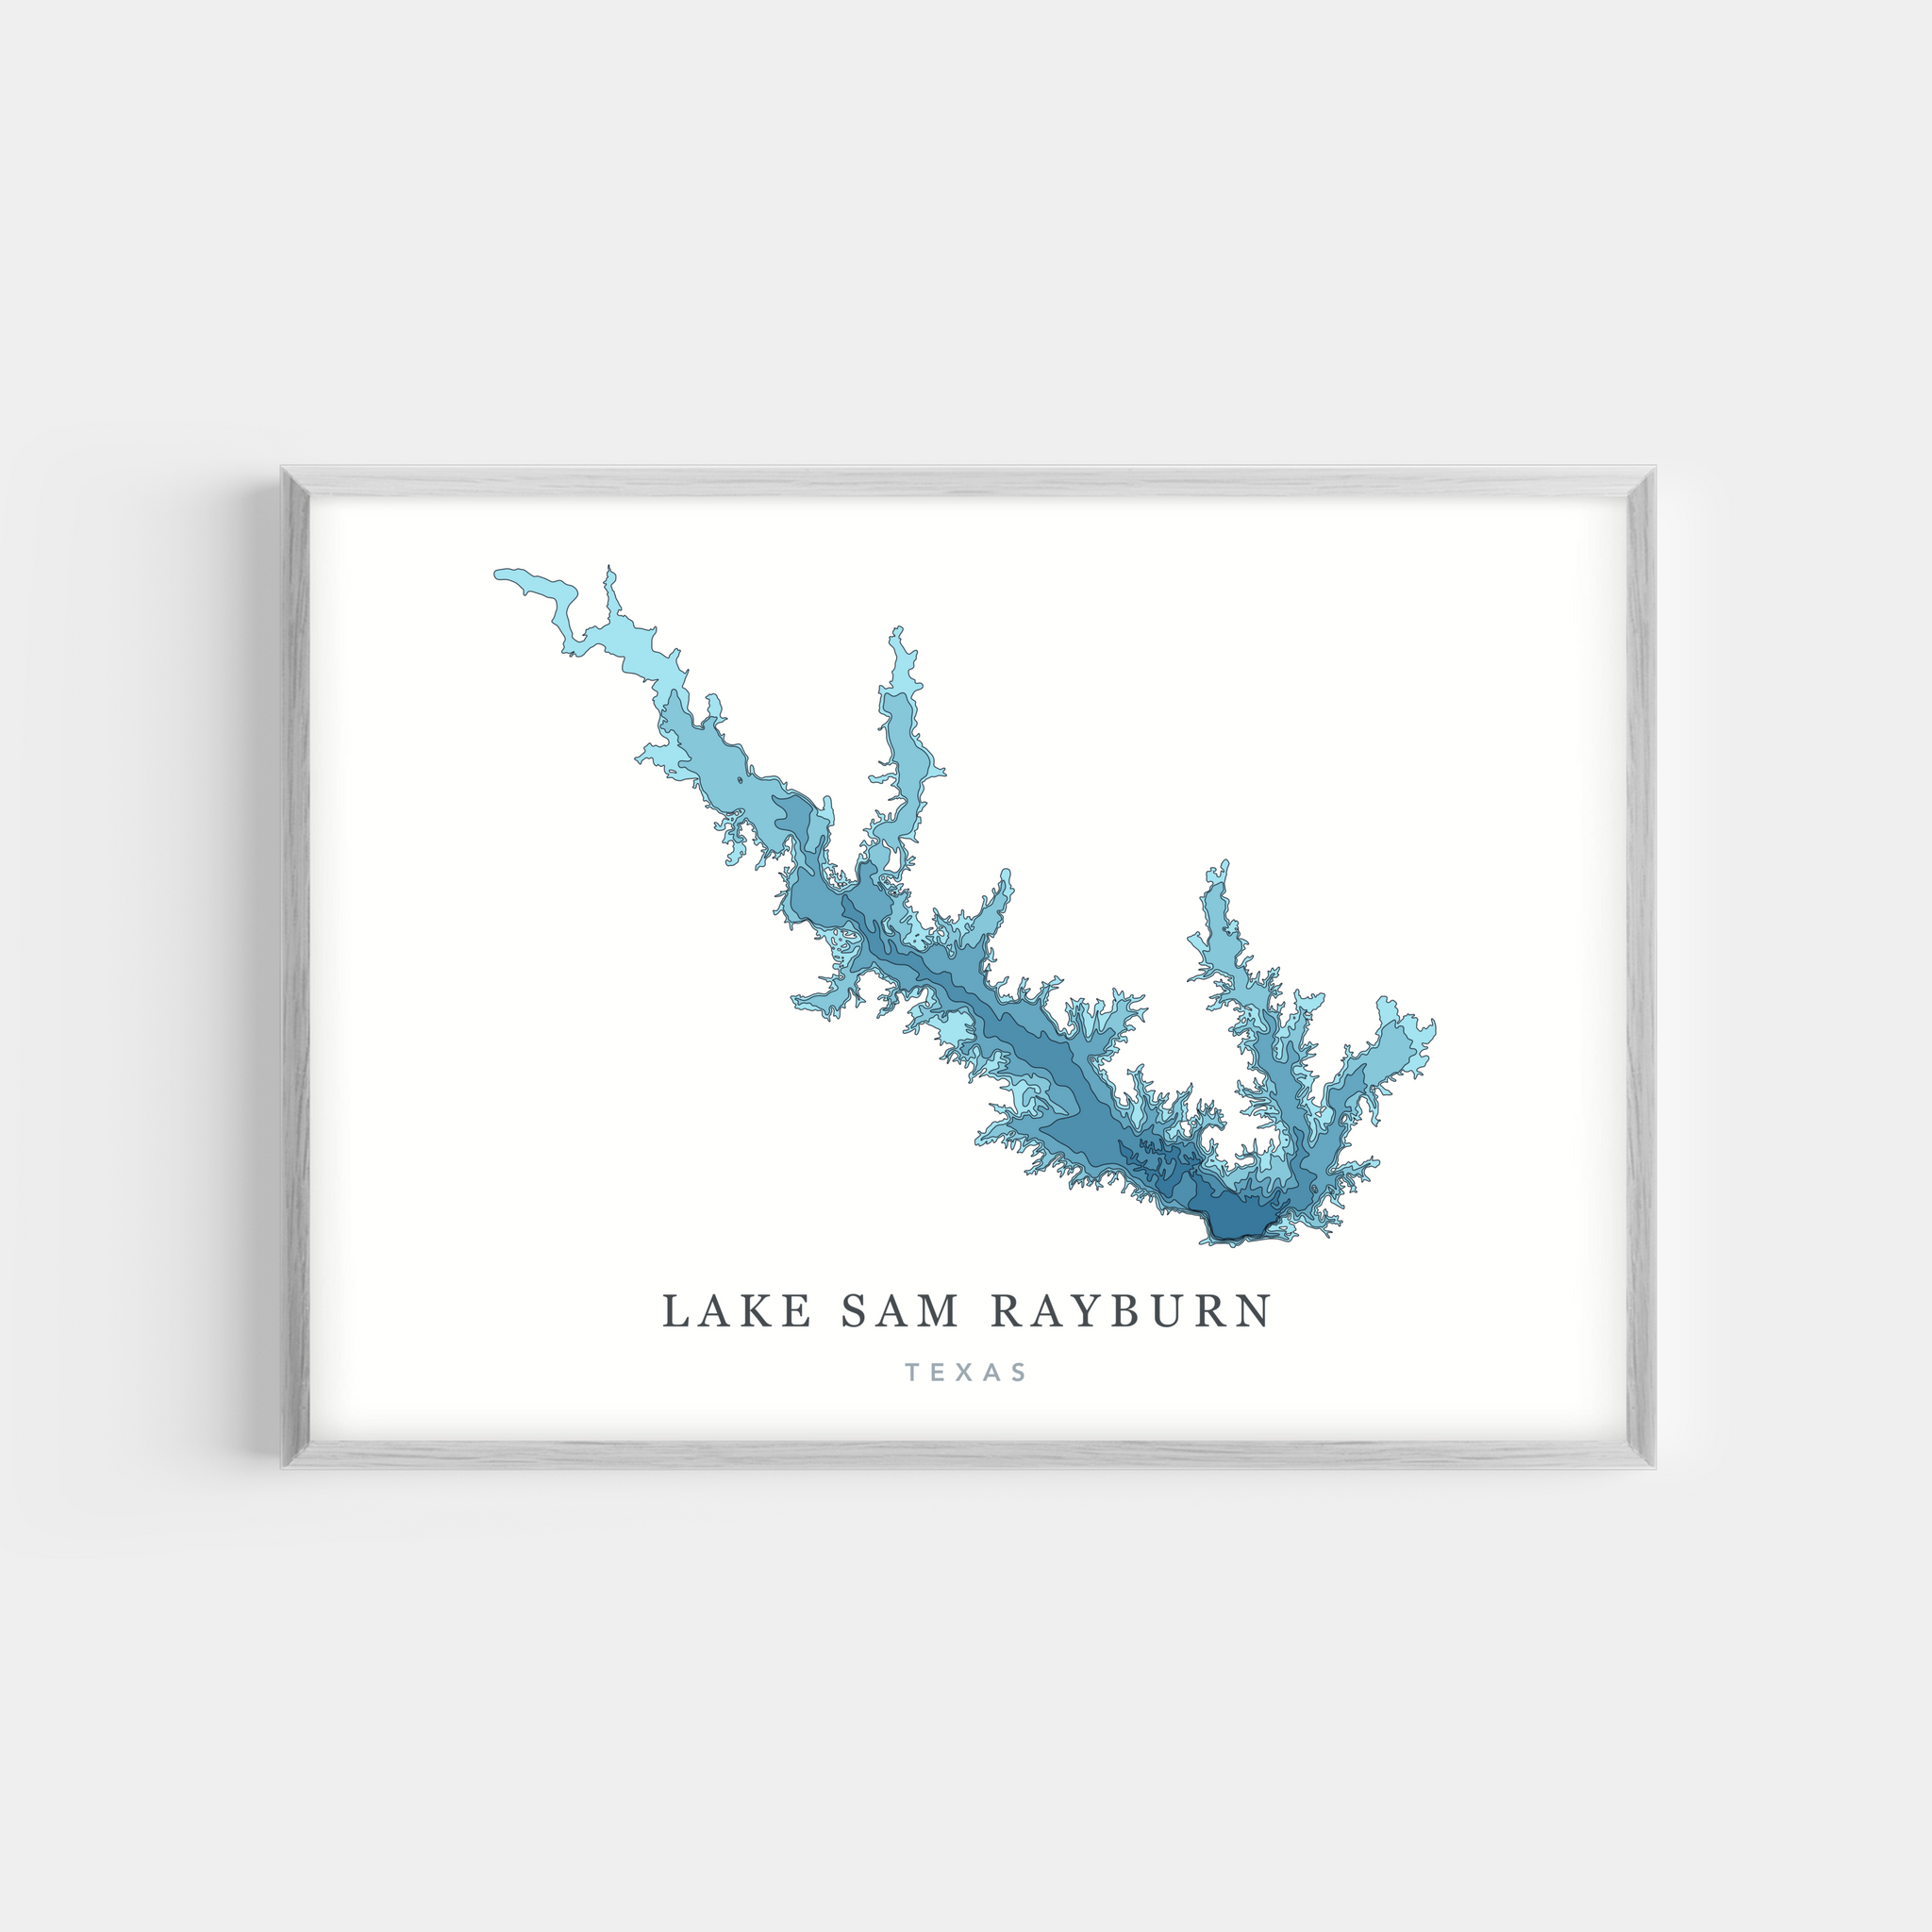 Lake Sam Rayburn, Texas | Photo Print